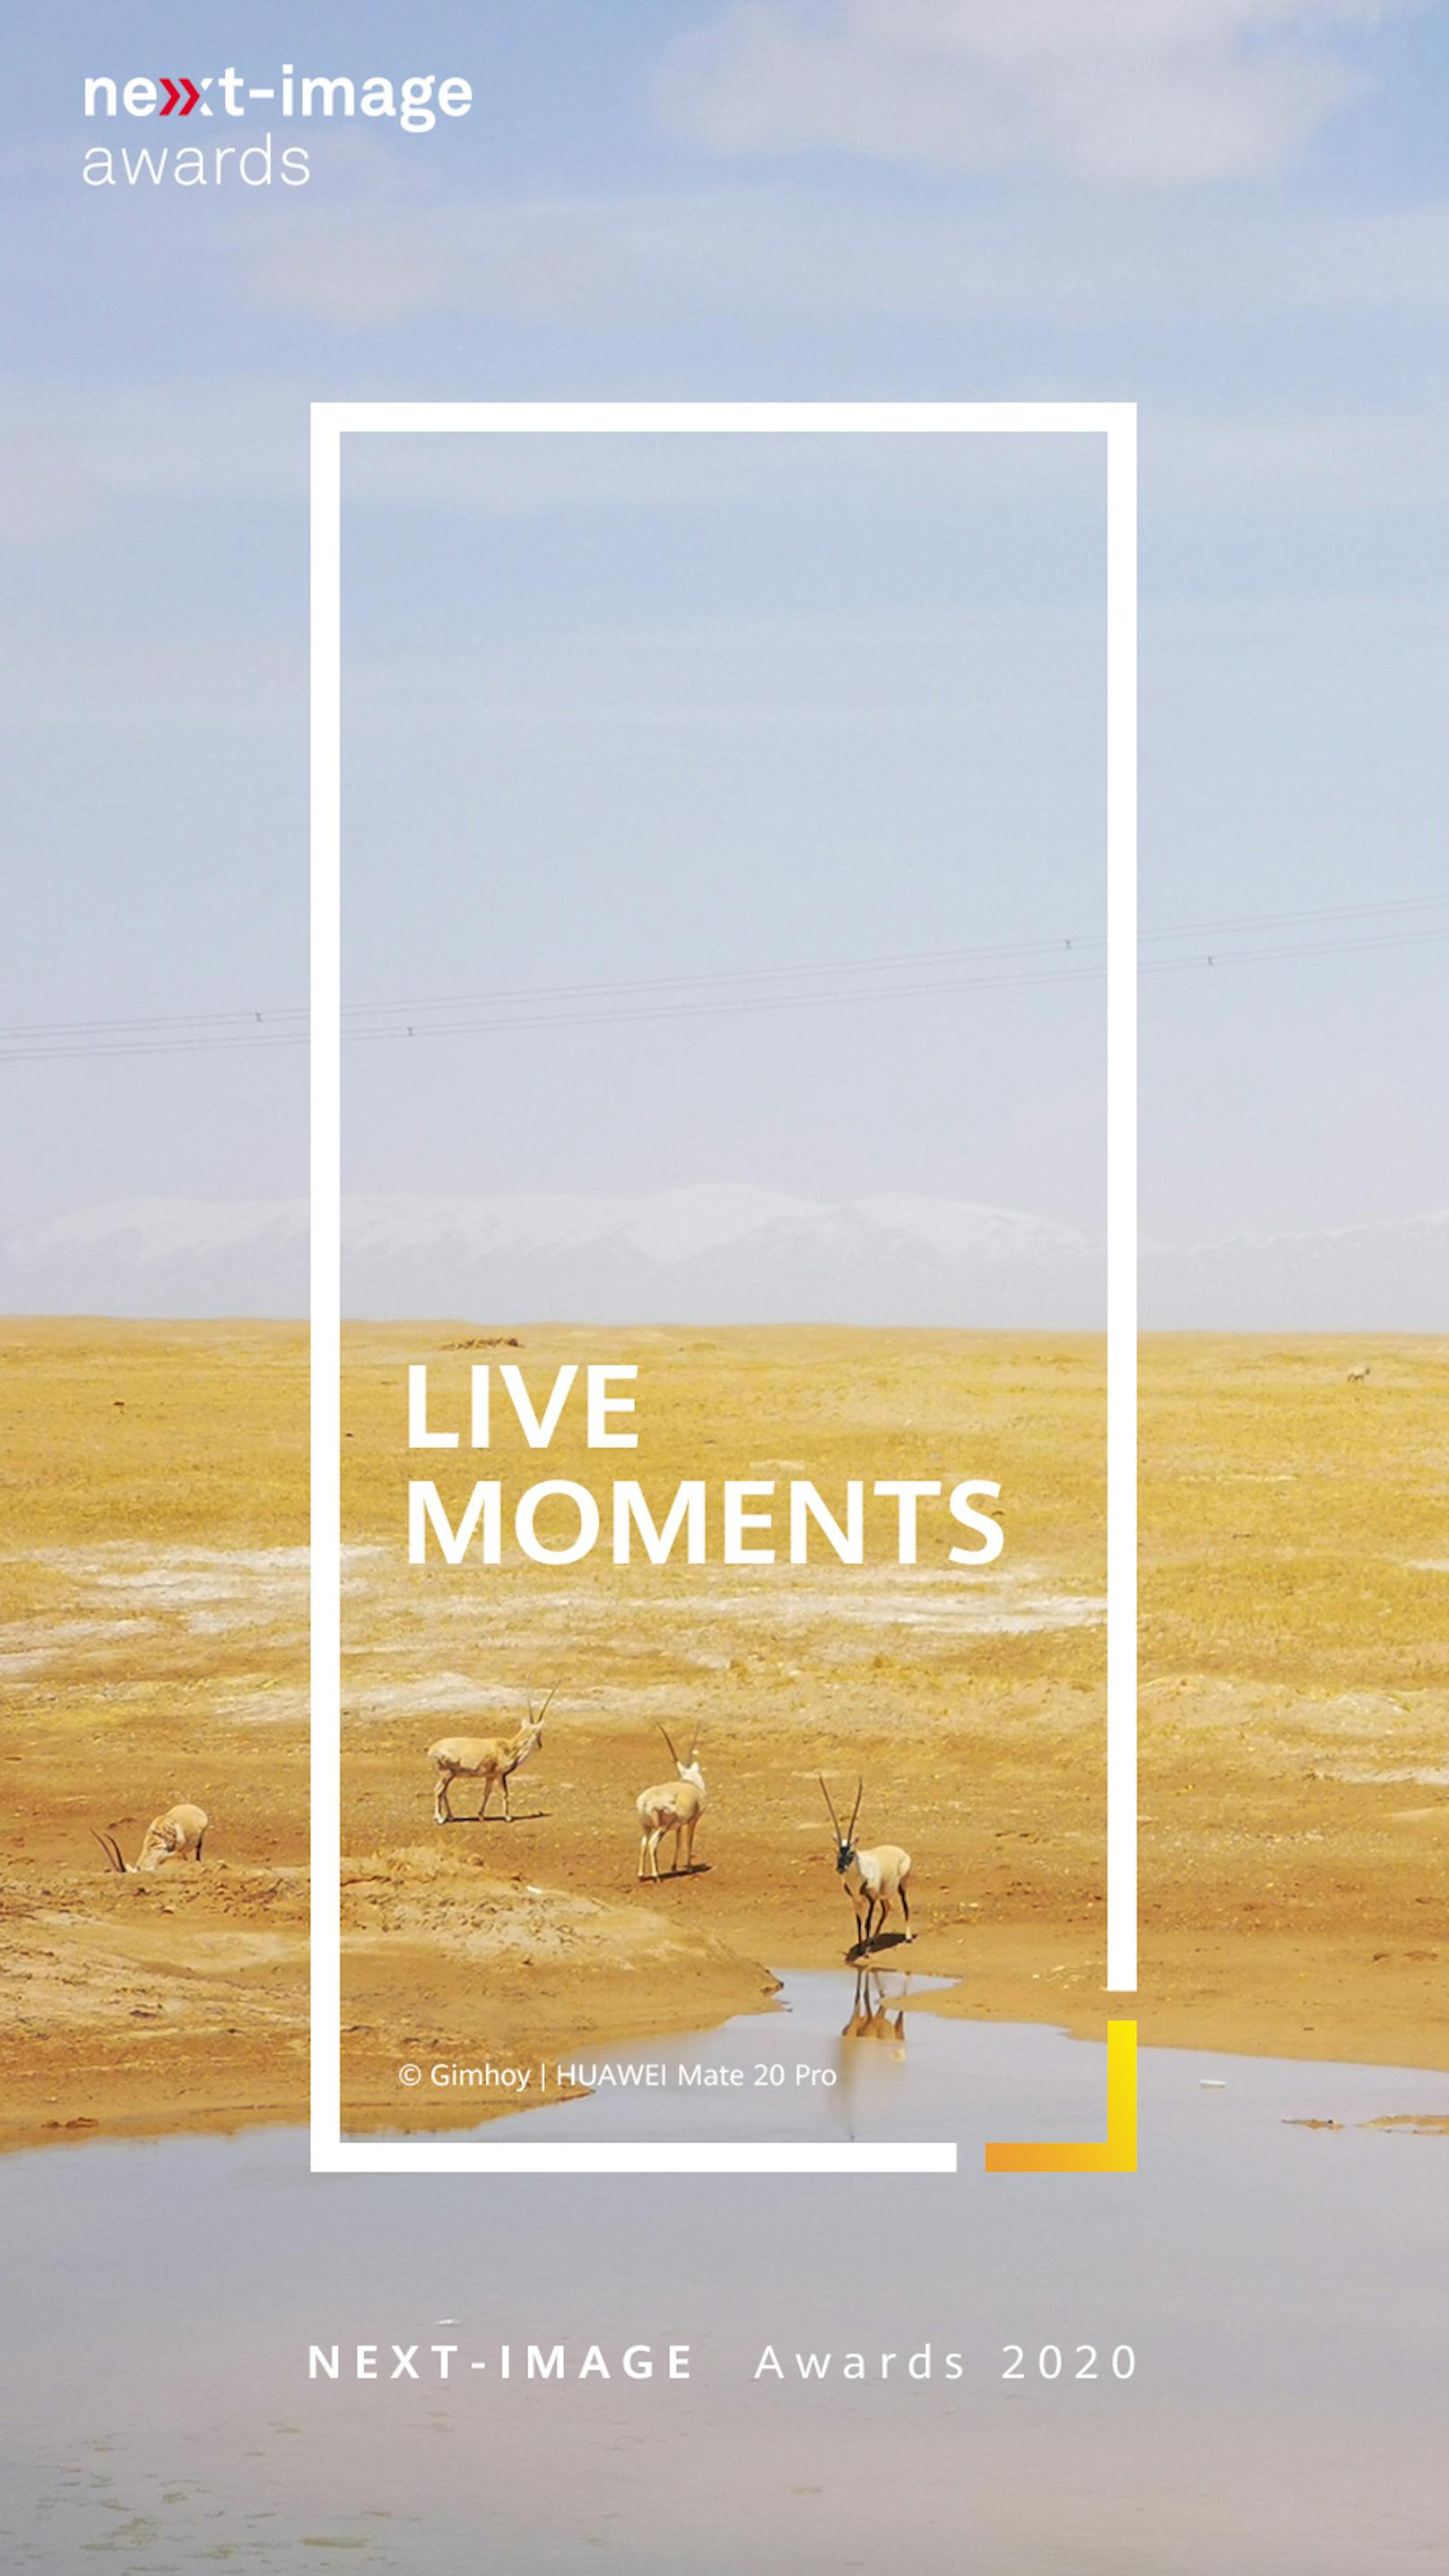 Huawei Next-Image Award 2020: Kategorie LIVE MOMENTS